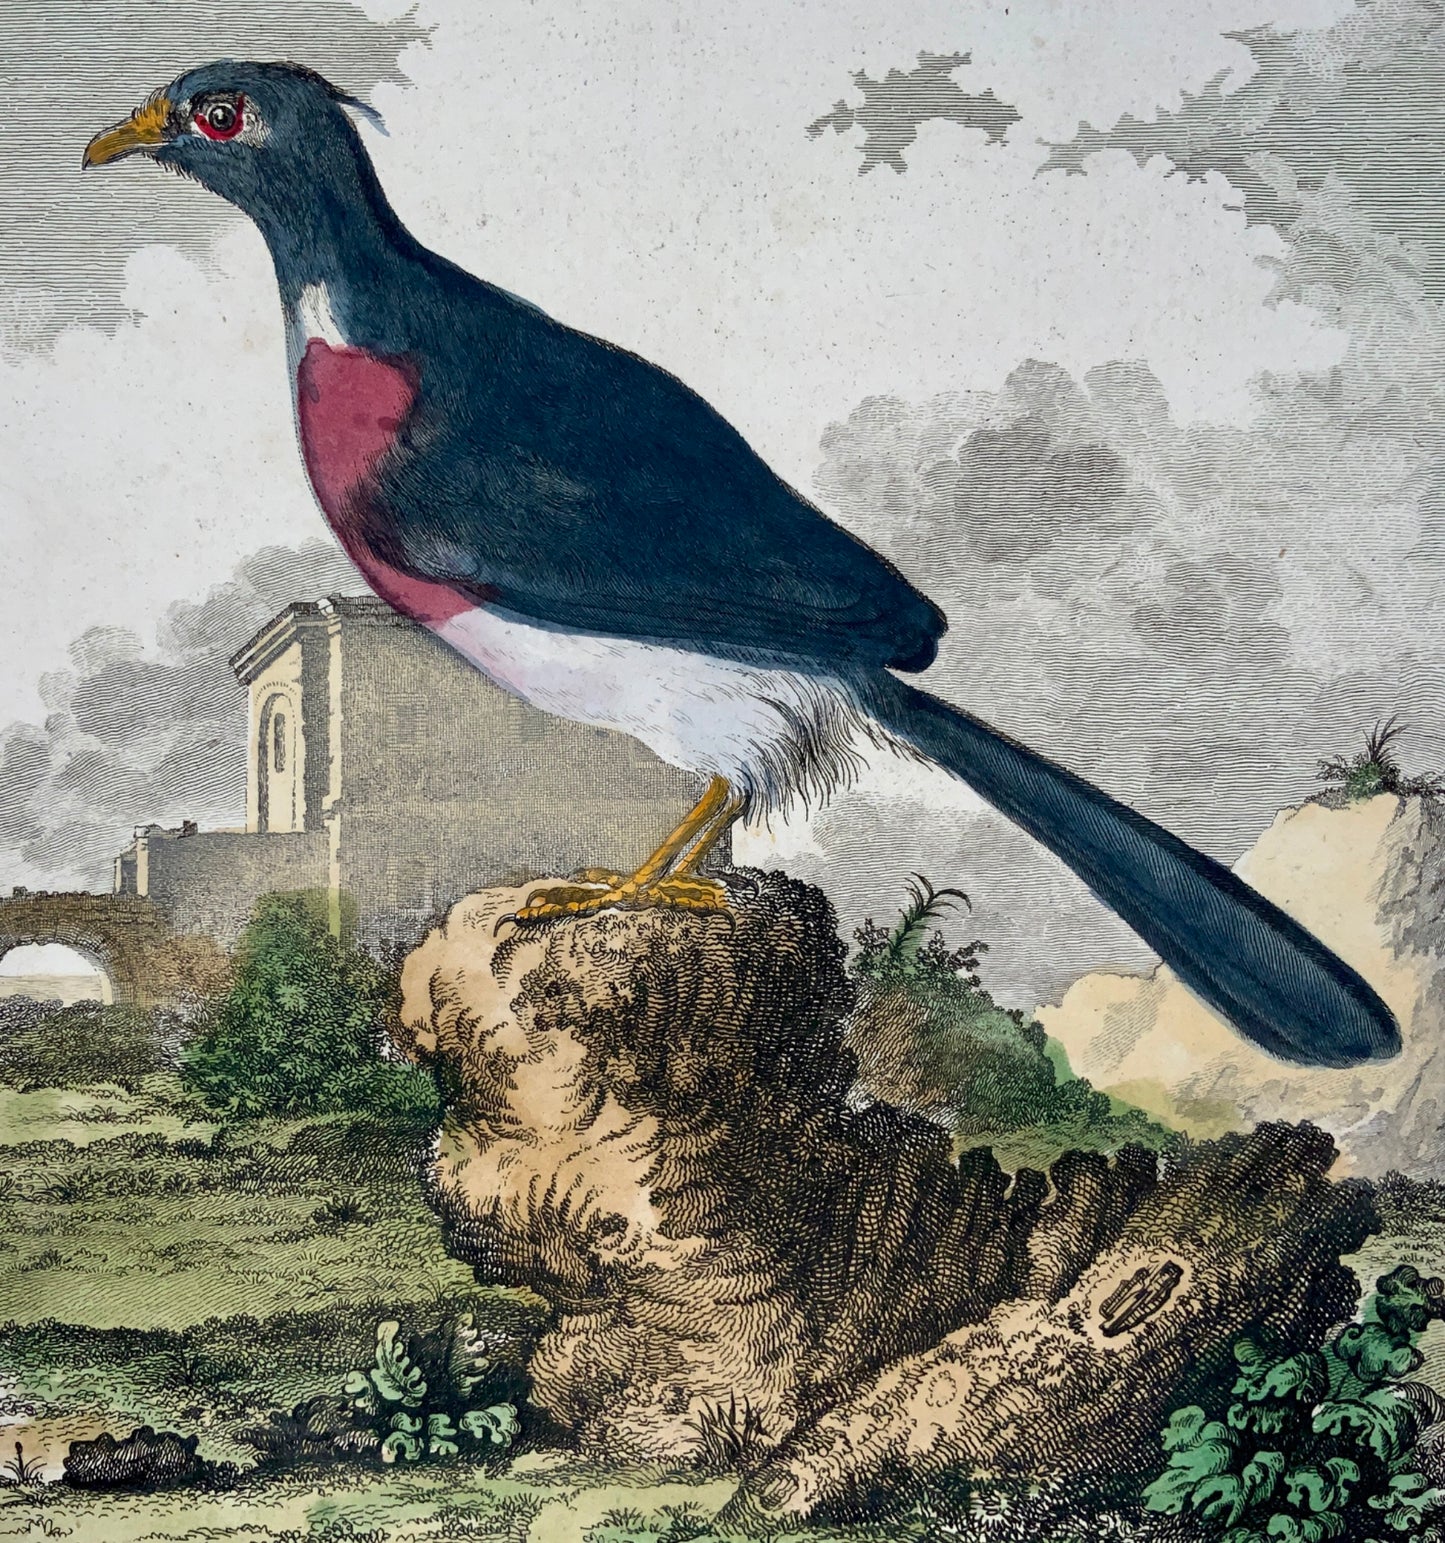 1779 de Seve; Hulk - Madagascar CUCKOO - Ornithology - 4to Large Edn engraving